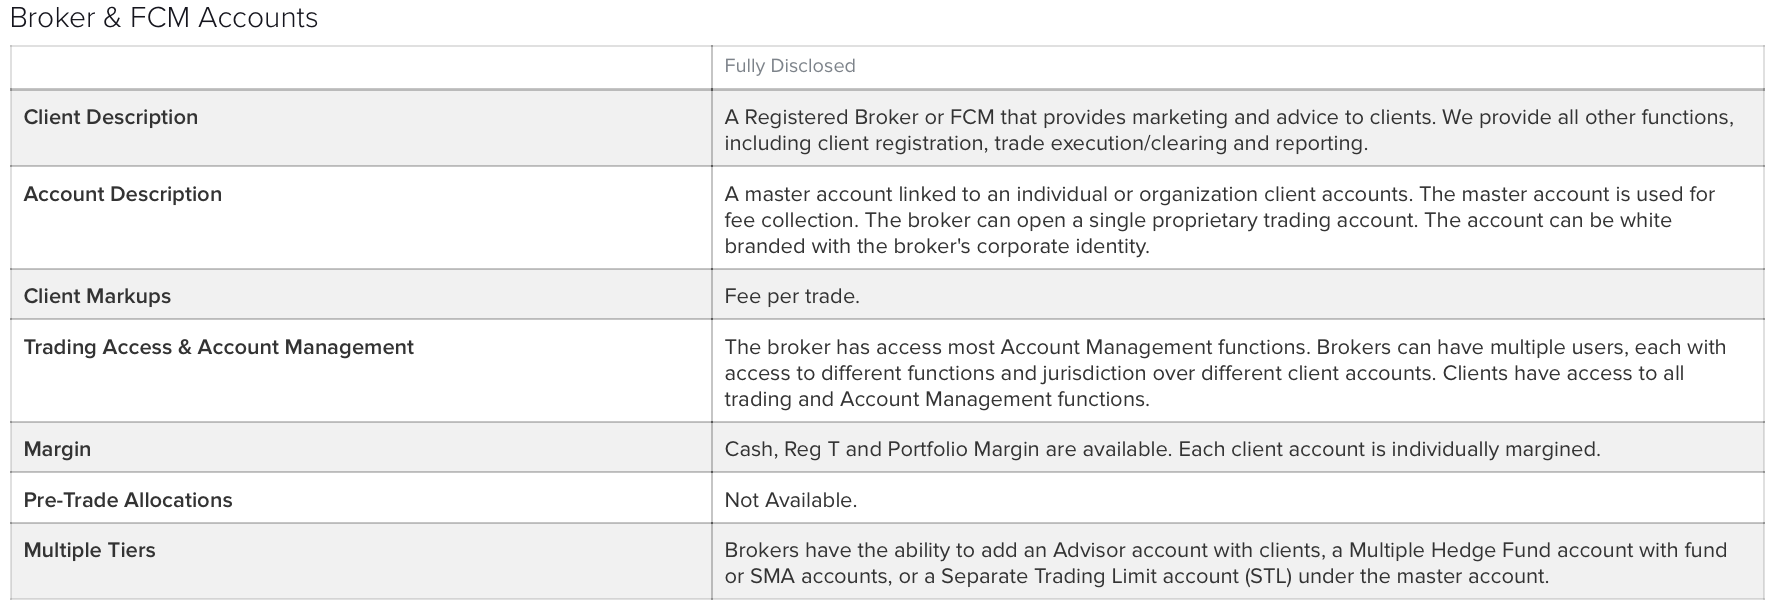 Account details of Broker & FCM Accounts on Interactive Brokers